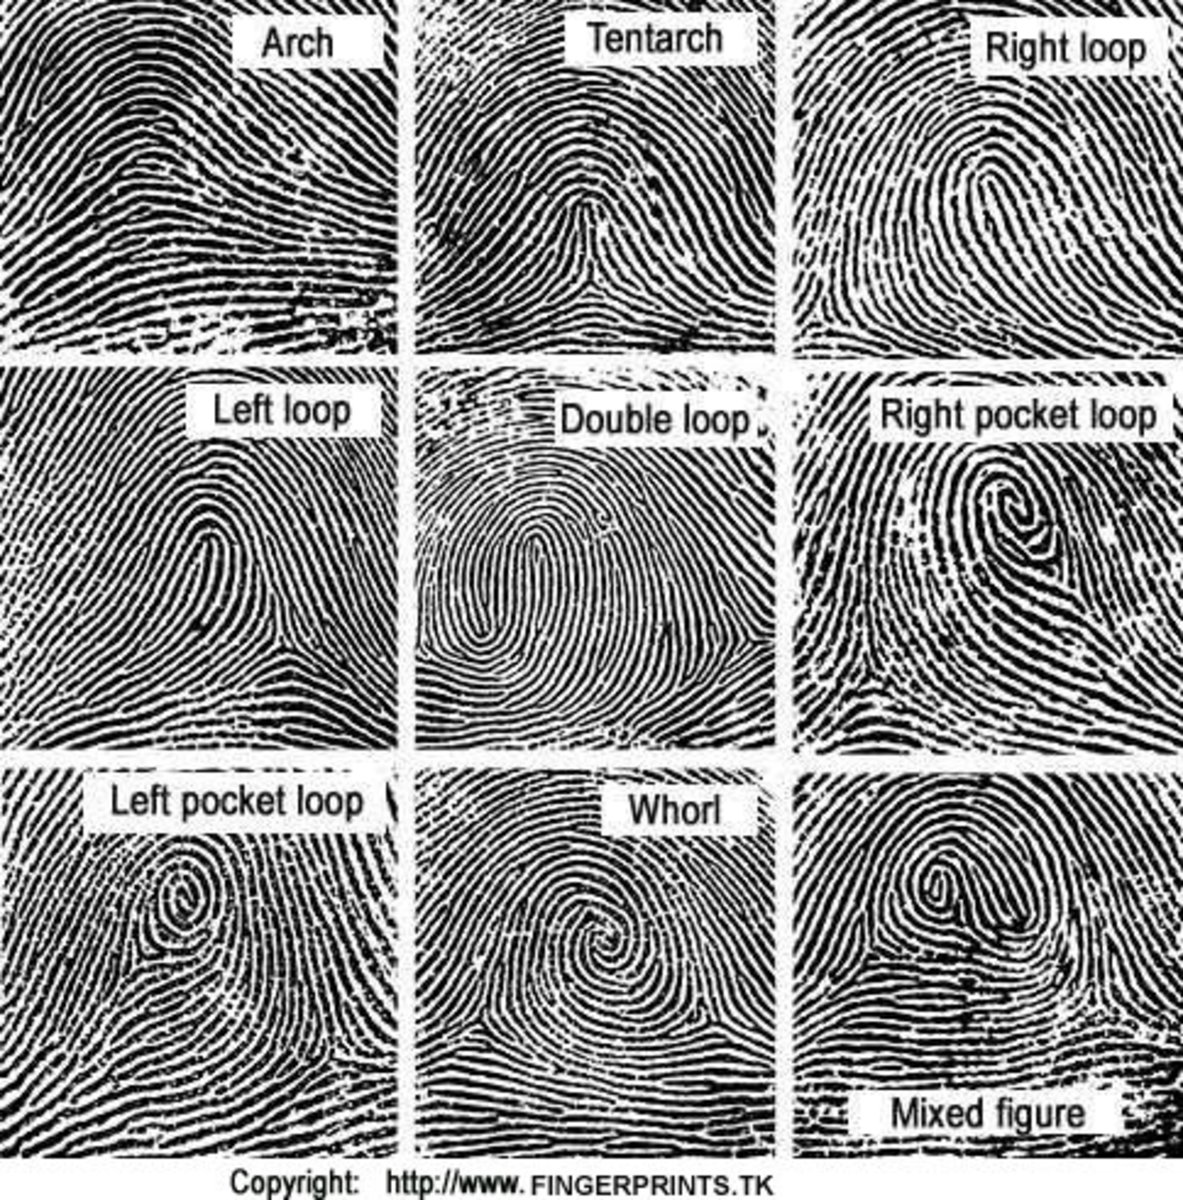 fingerprint-science-project-for-kids-wehavekids